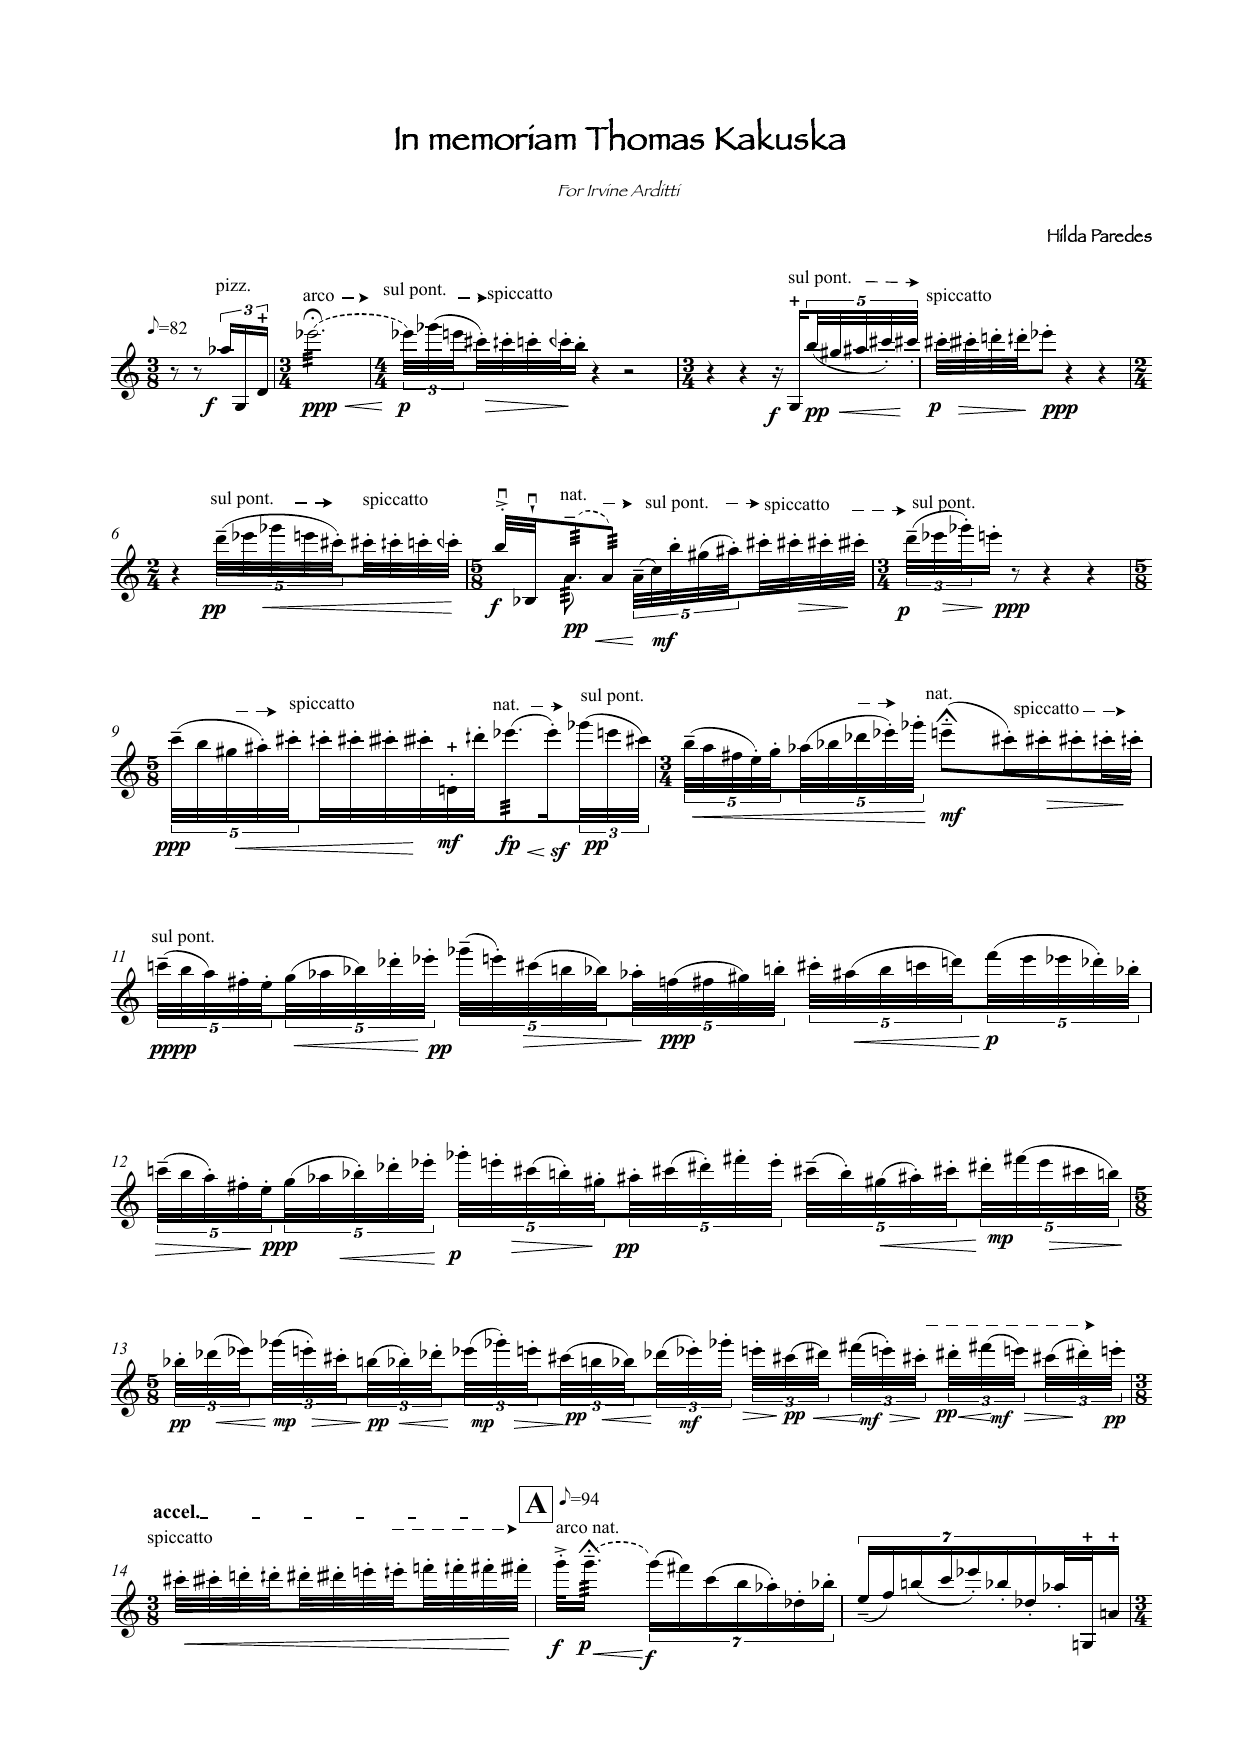 Hilda Paredes In Memoriam Thomas Kakuska Sheet Music Notes & Chords for Violin - Download or Print PDF